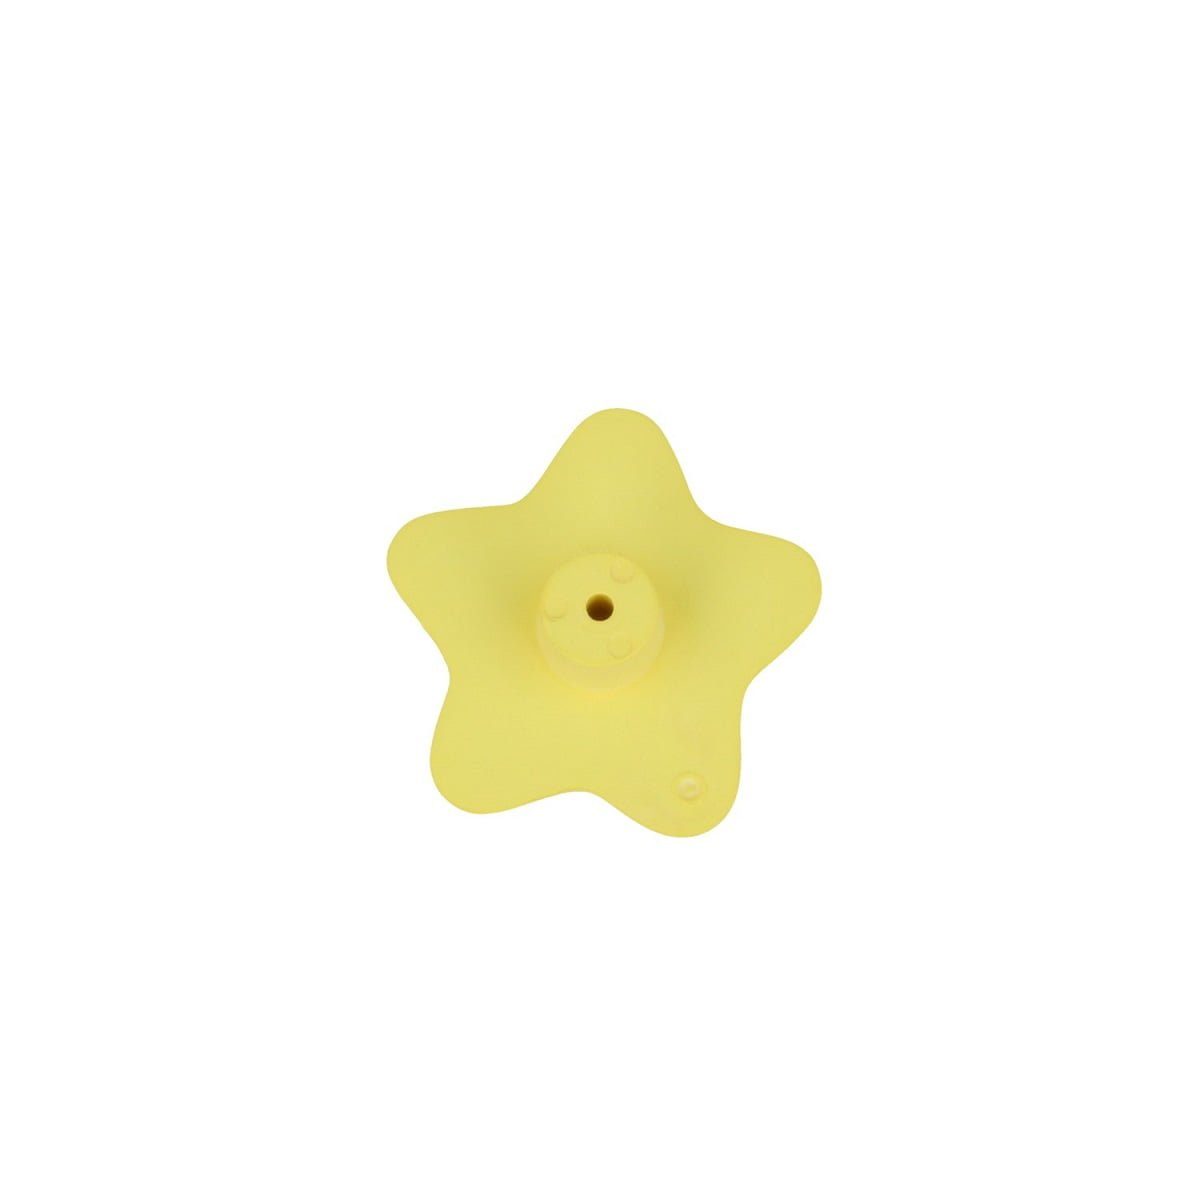 Modell Gelb Türbeschlag Stern Kinderzimmerknopf Möbelknopf